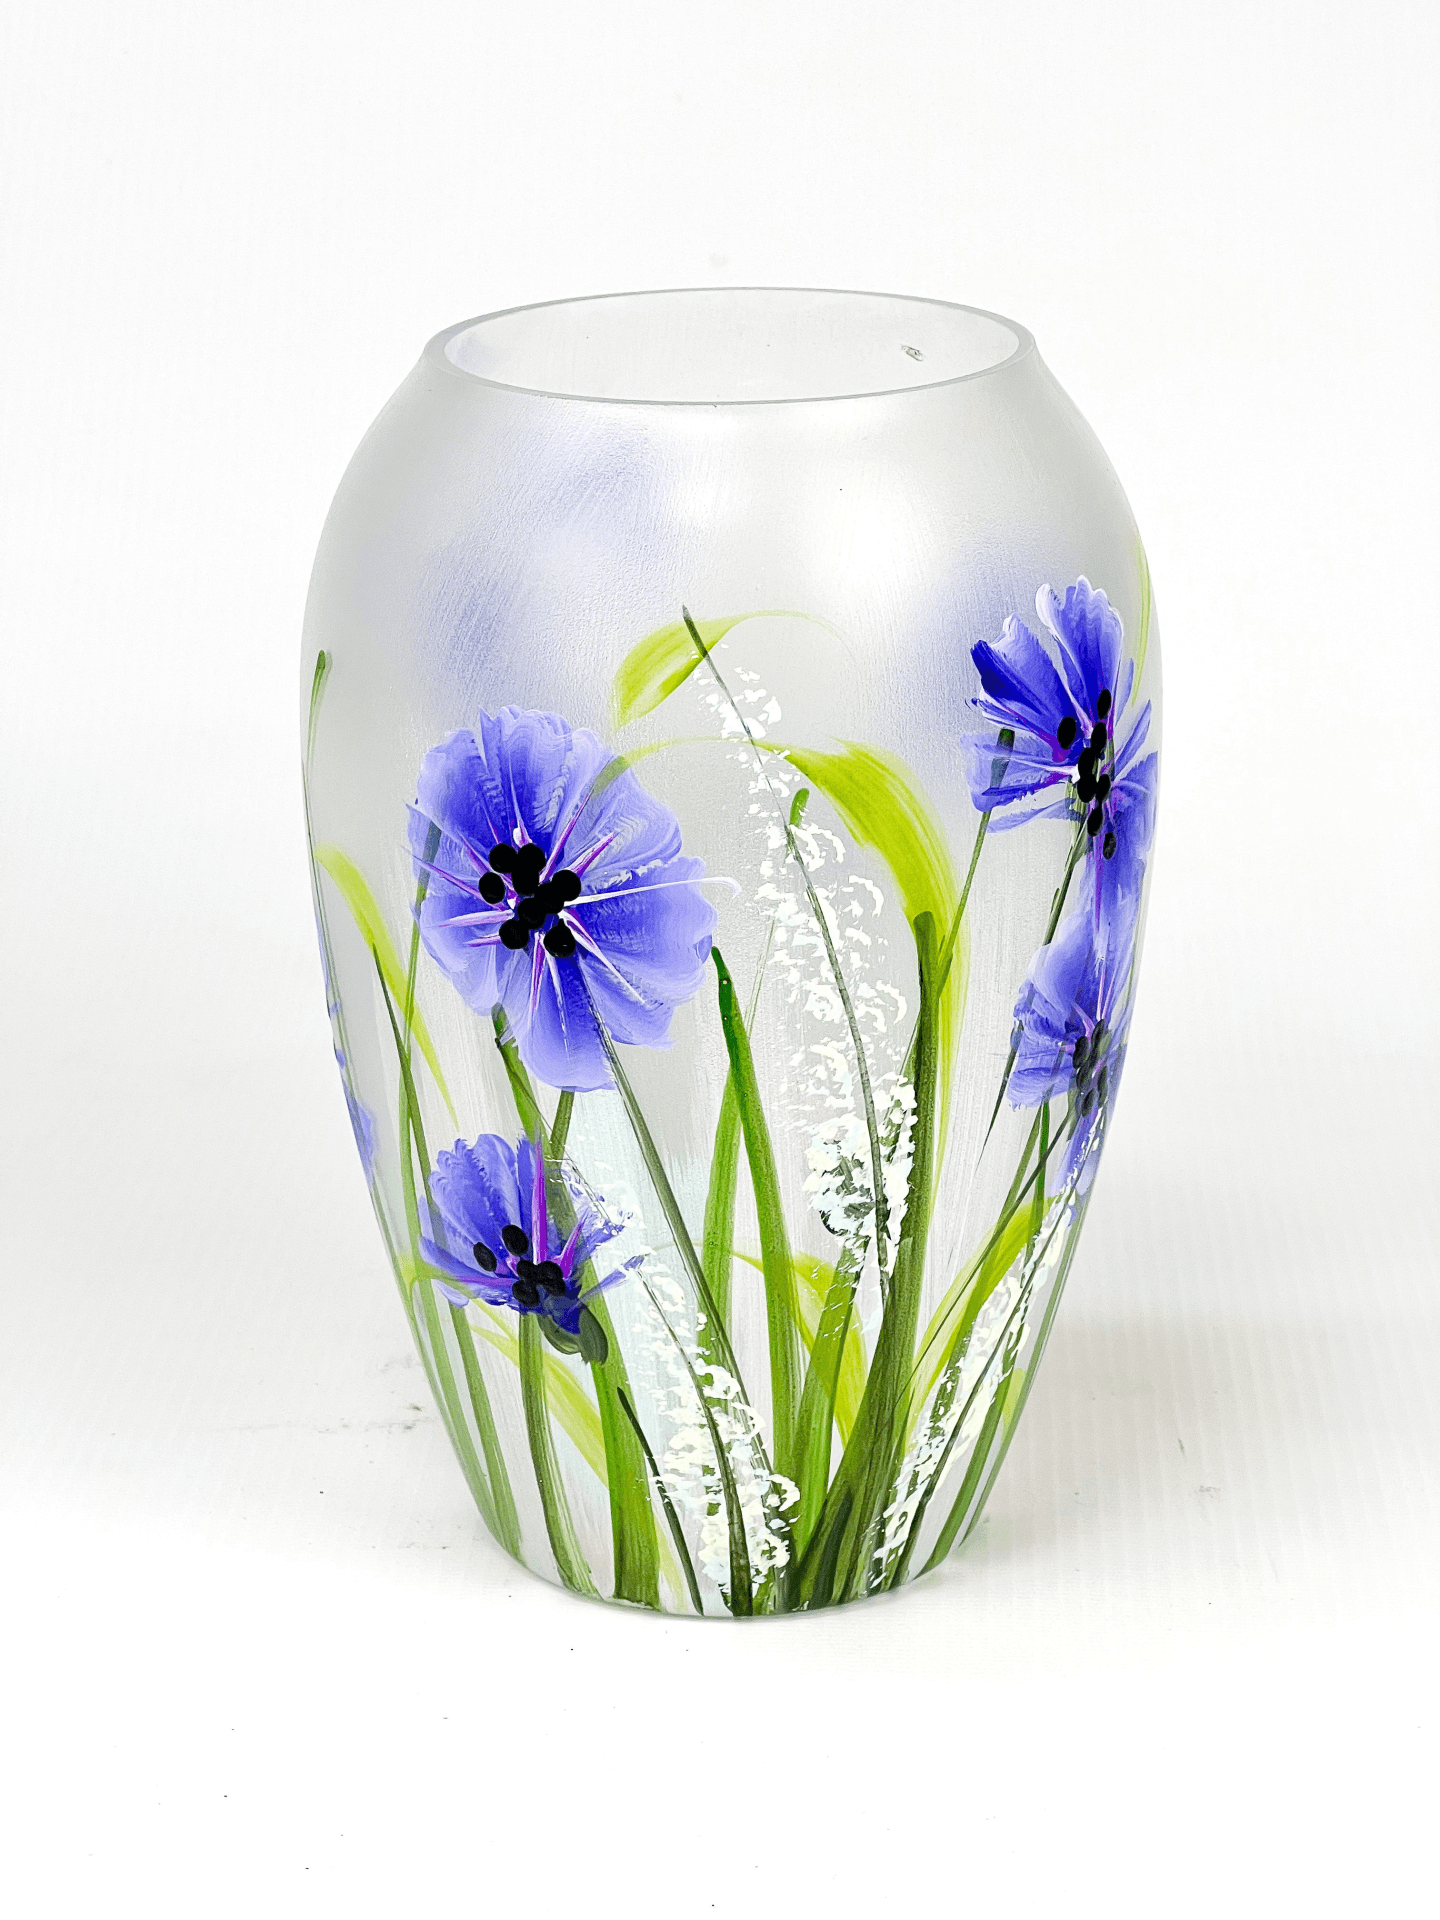 Art decorative glass vase 9381/200/sh174  